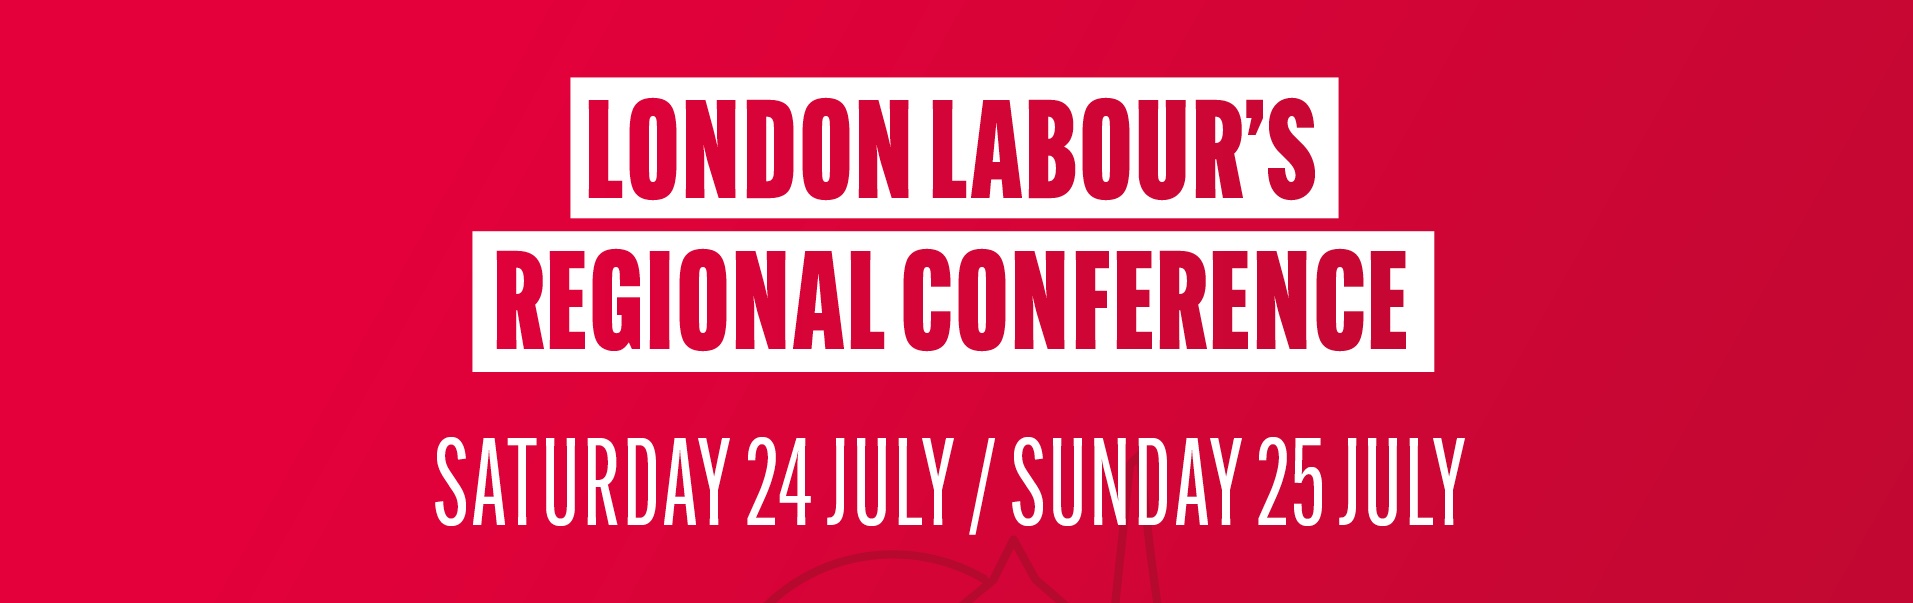 London Labour Regional Conference - Saturday 24 July / Sunday 25 July